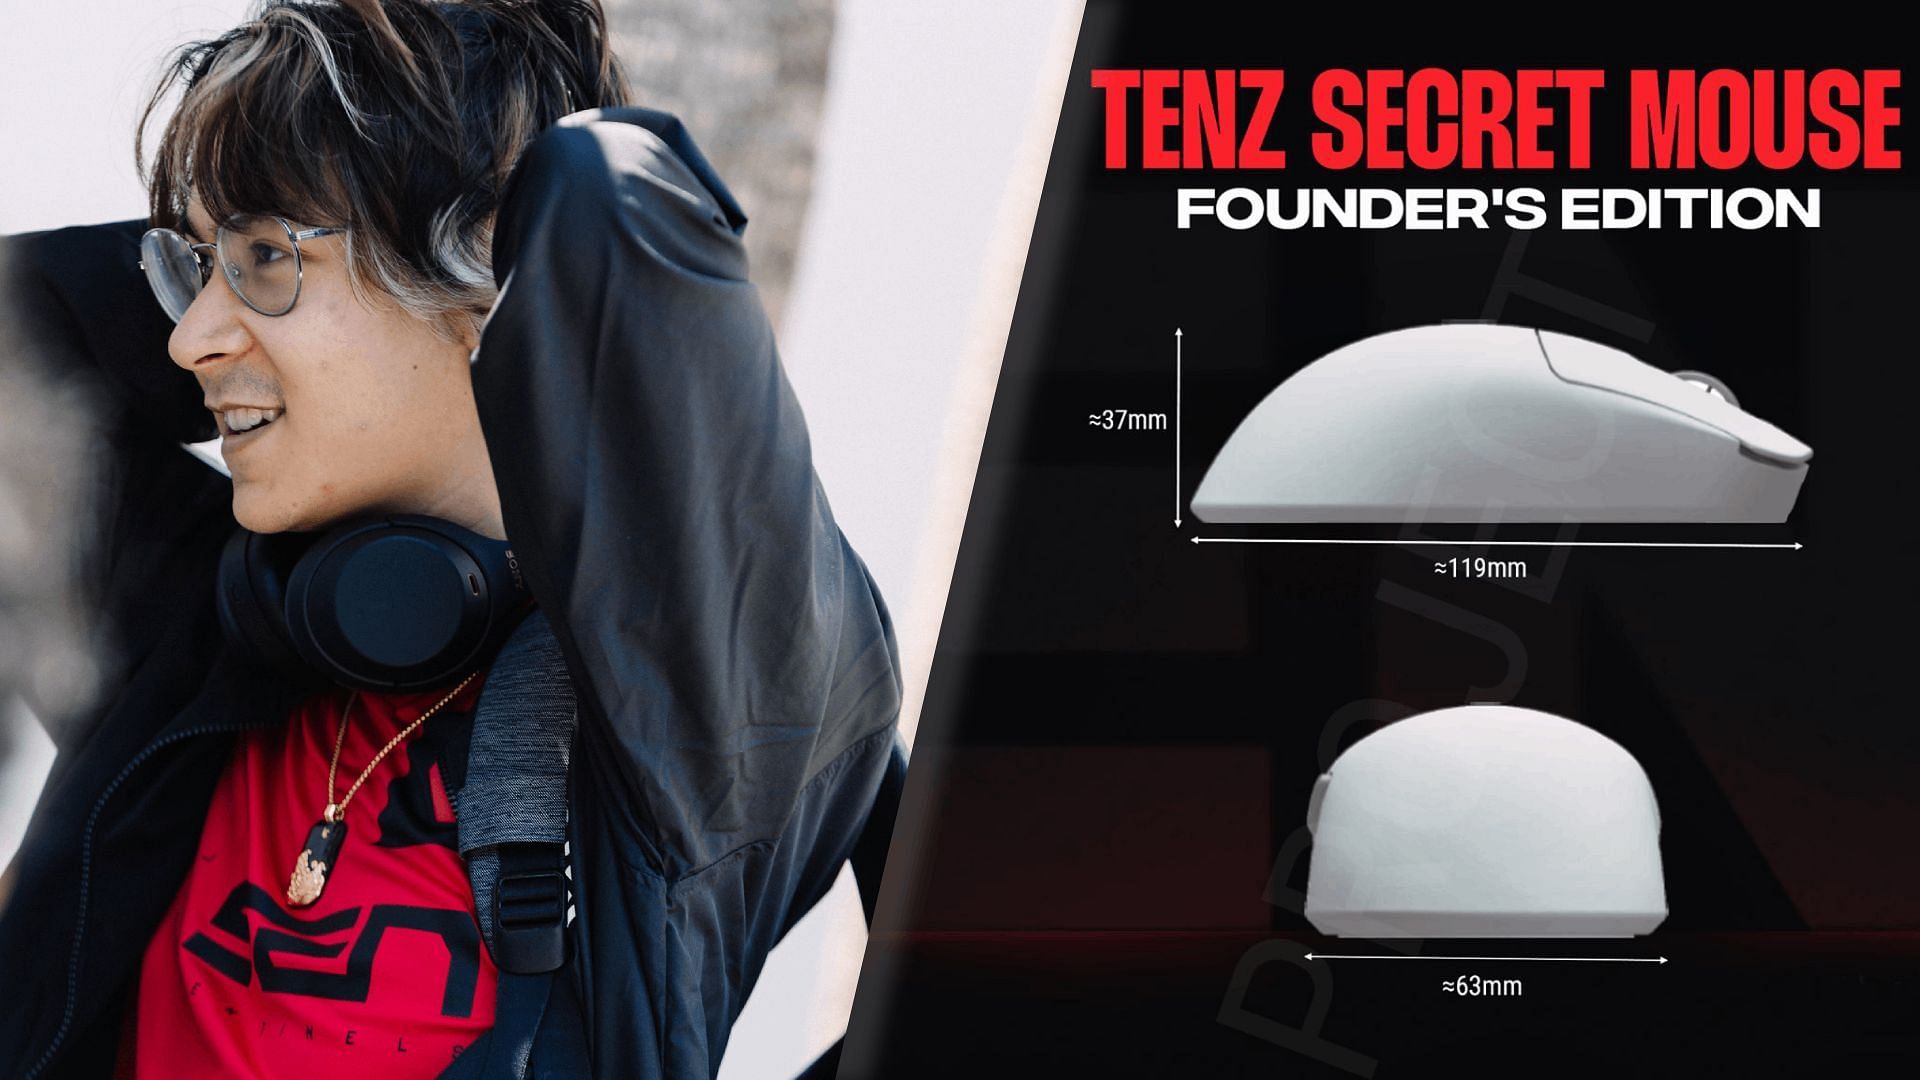 Valorant pro TenZ released early prototype of his Secret mouse (Image via Sportskeeda)